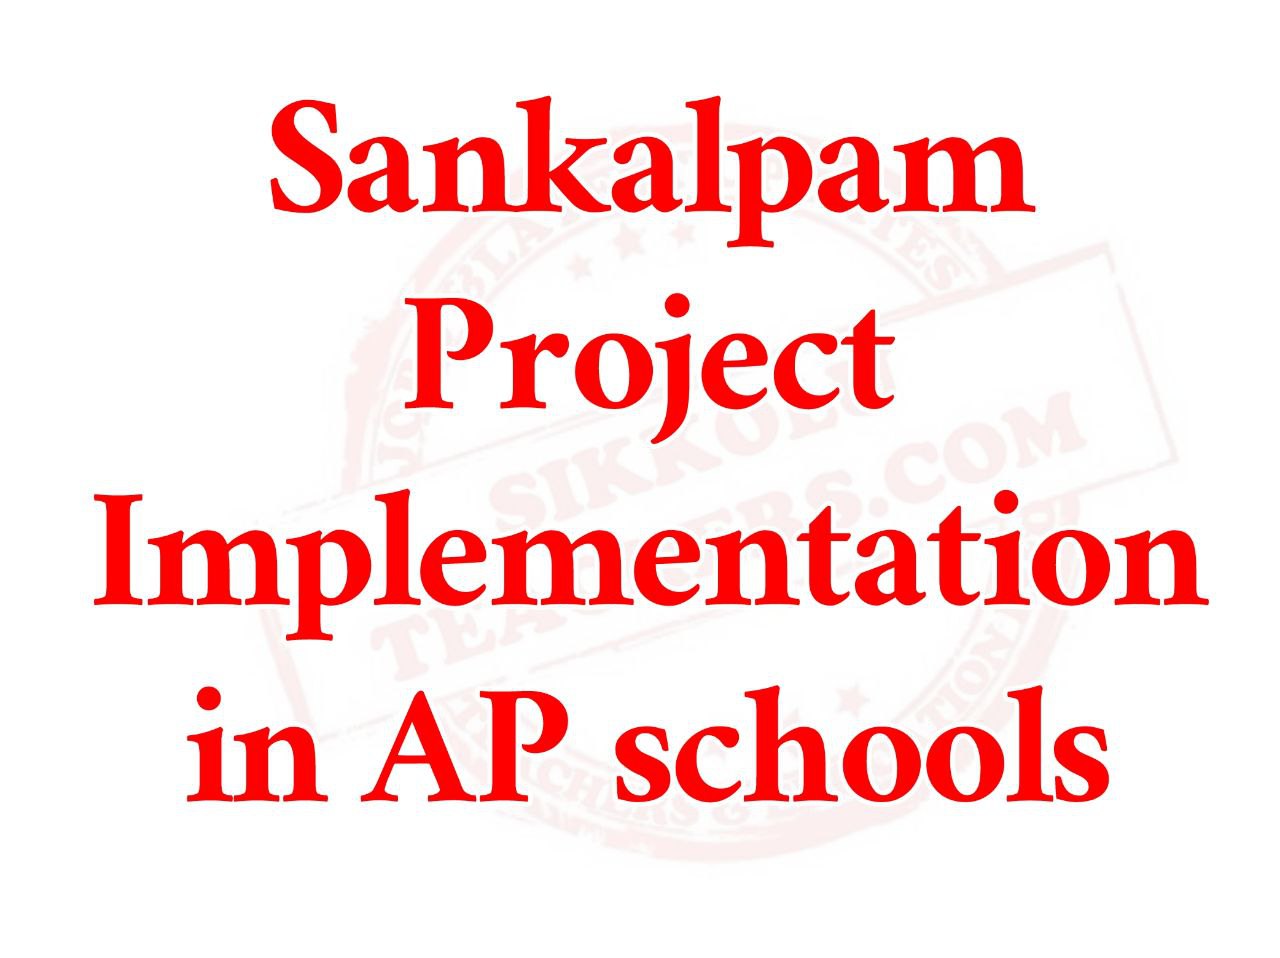 Sankalpam Project Implementation in AP schools